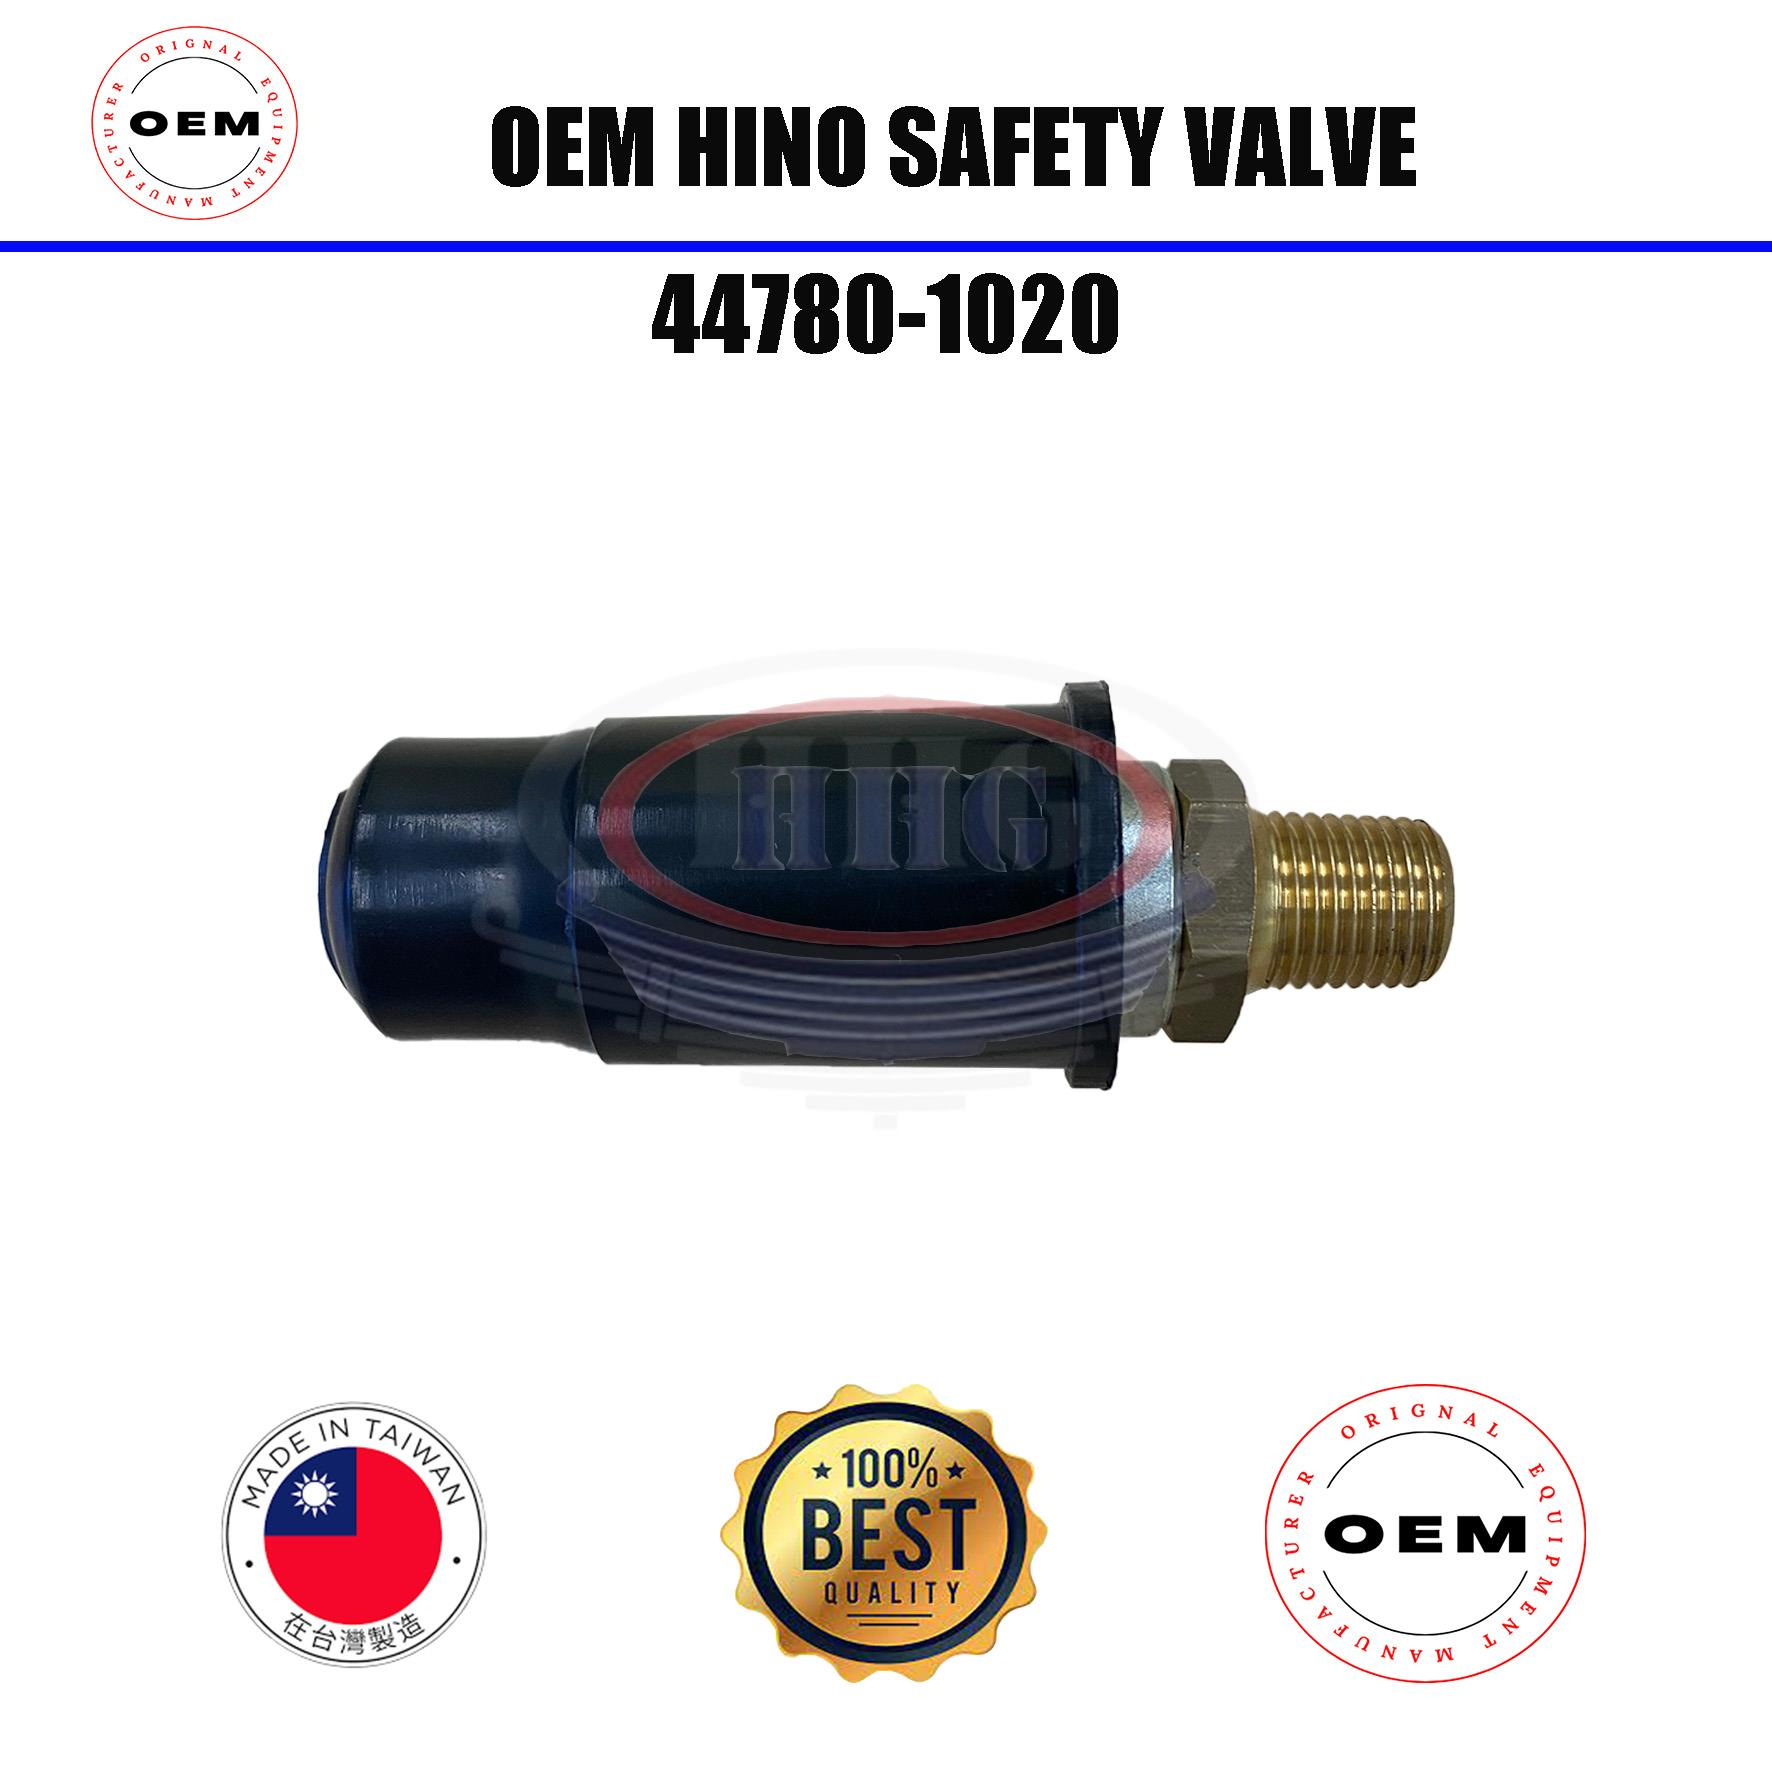 OEM Hino Safety Valve (44780-1020)